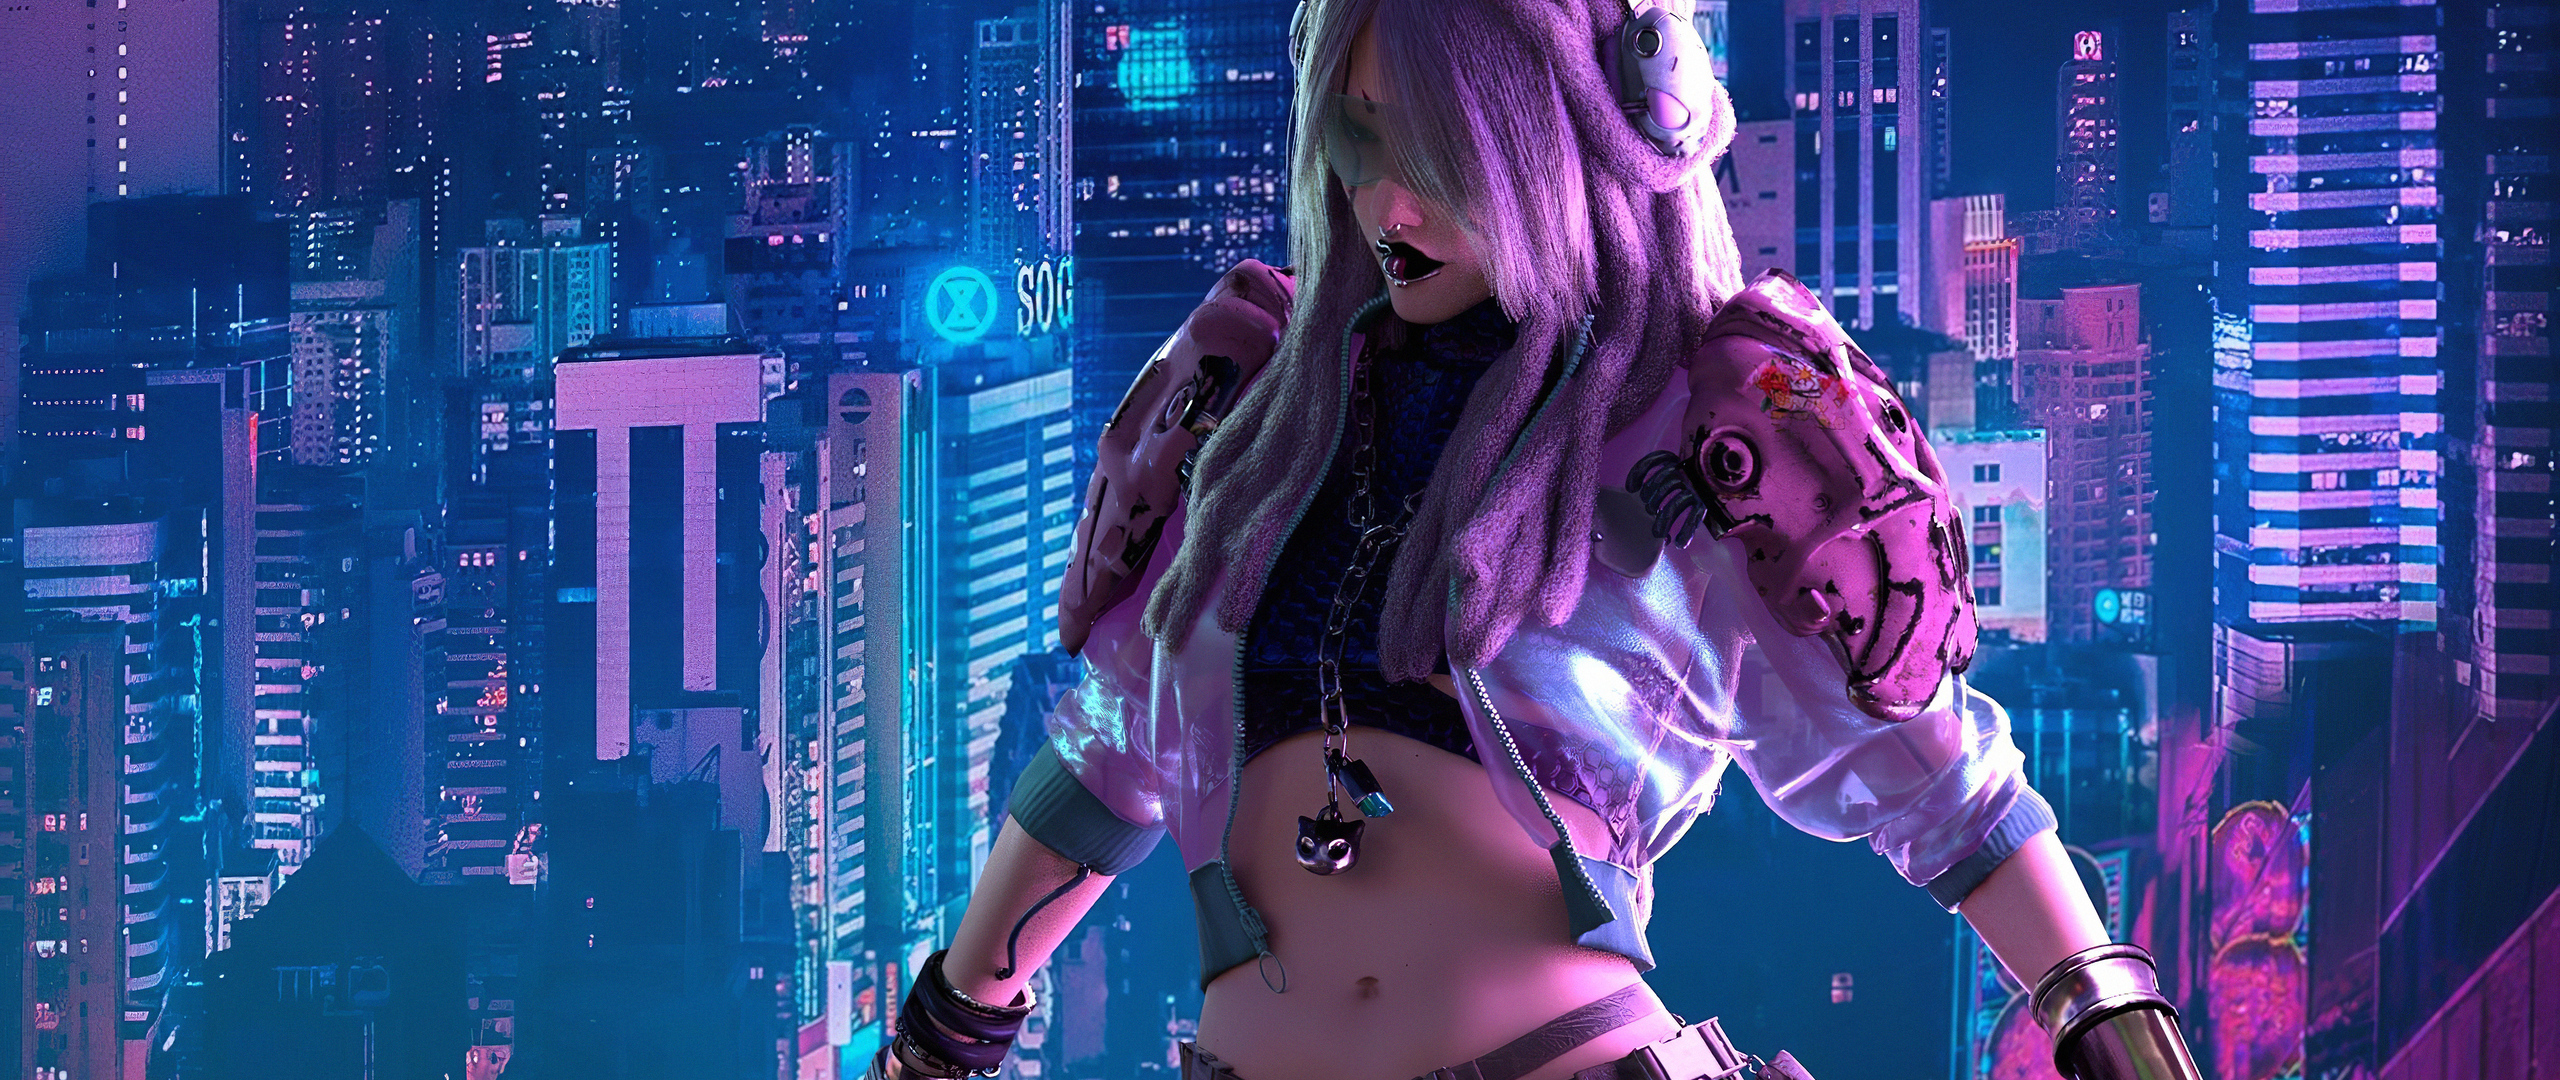 Cyberpunk girl art neon фото 104